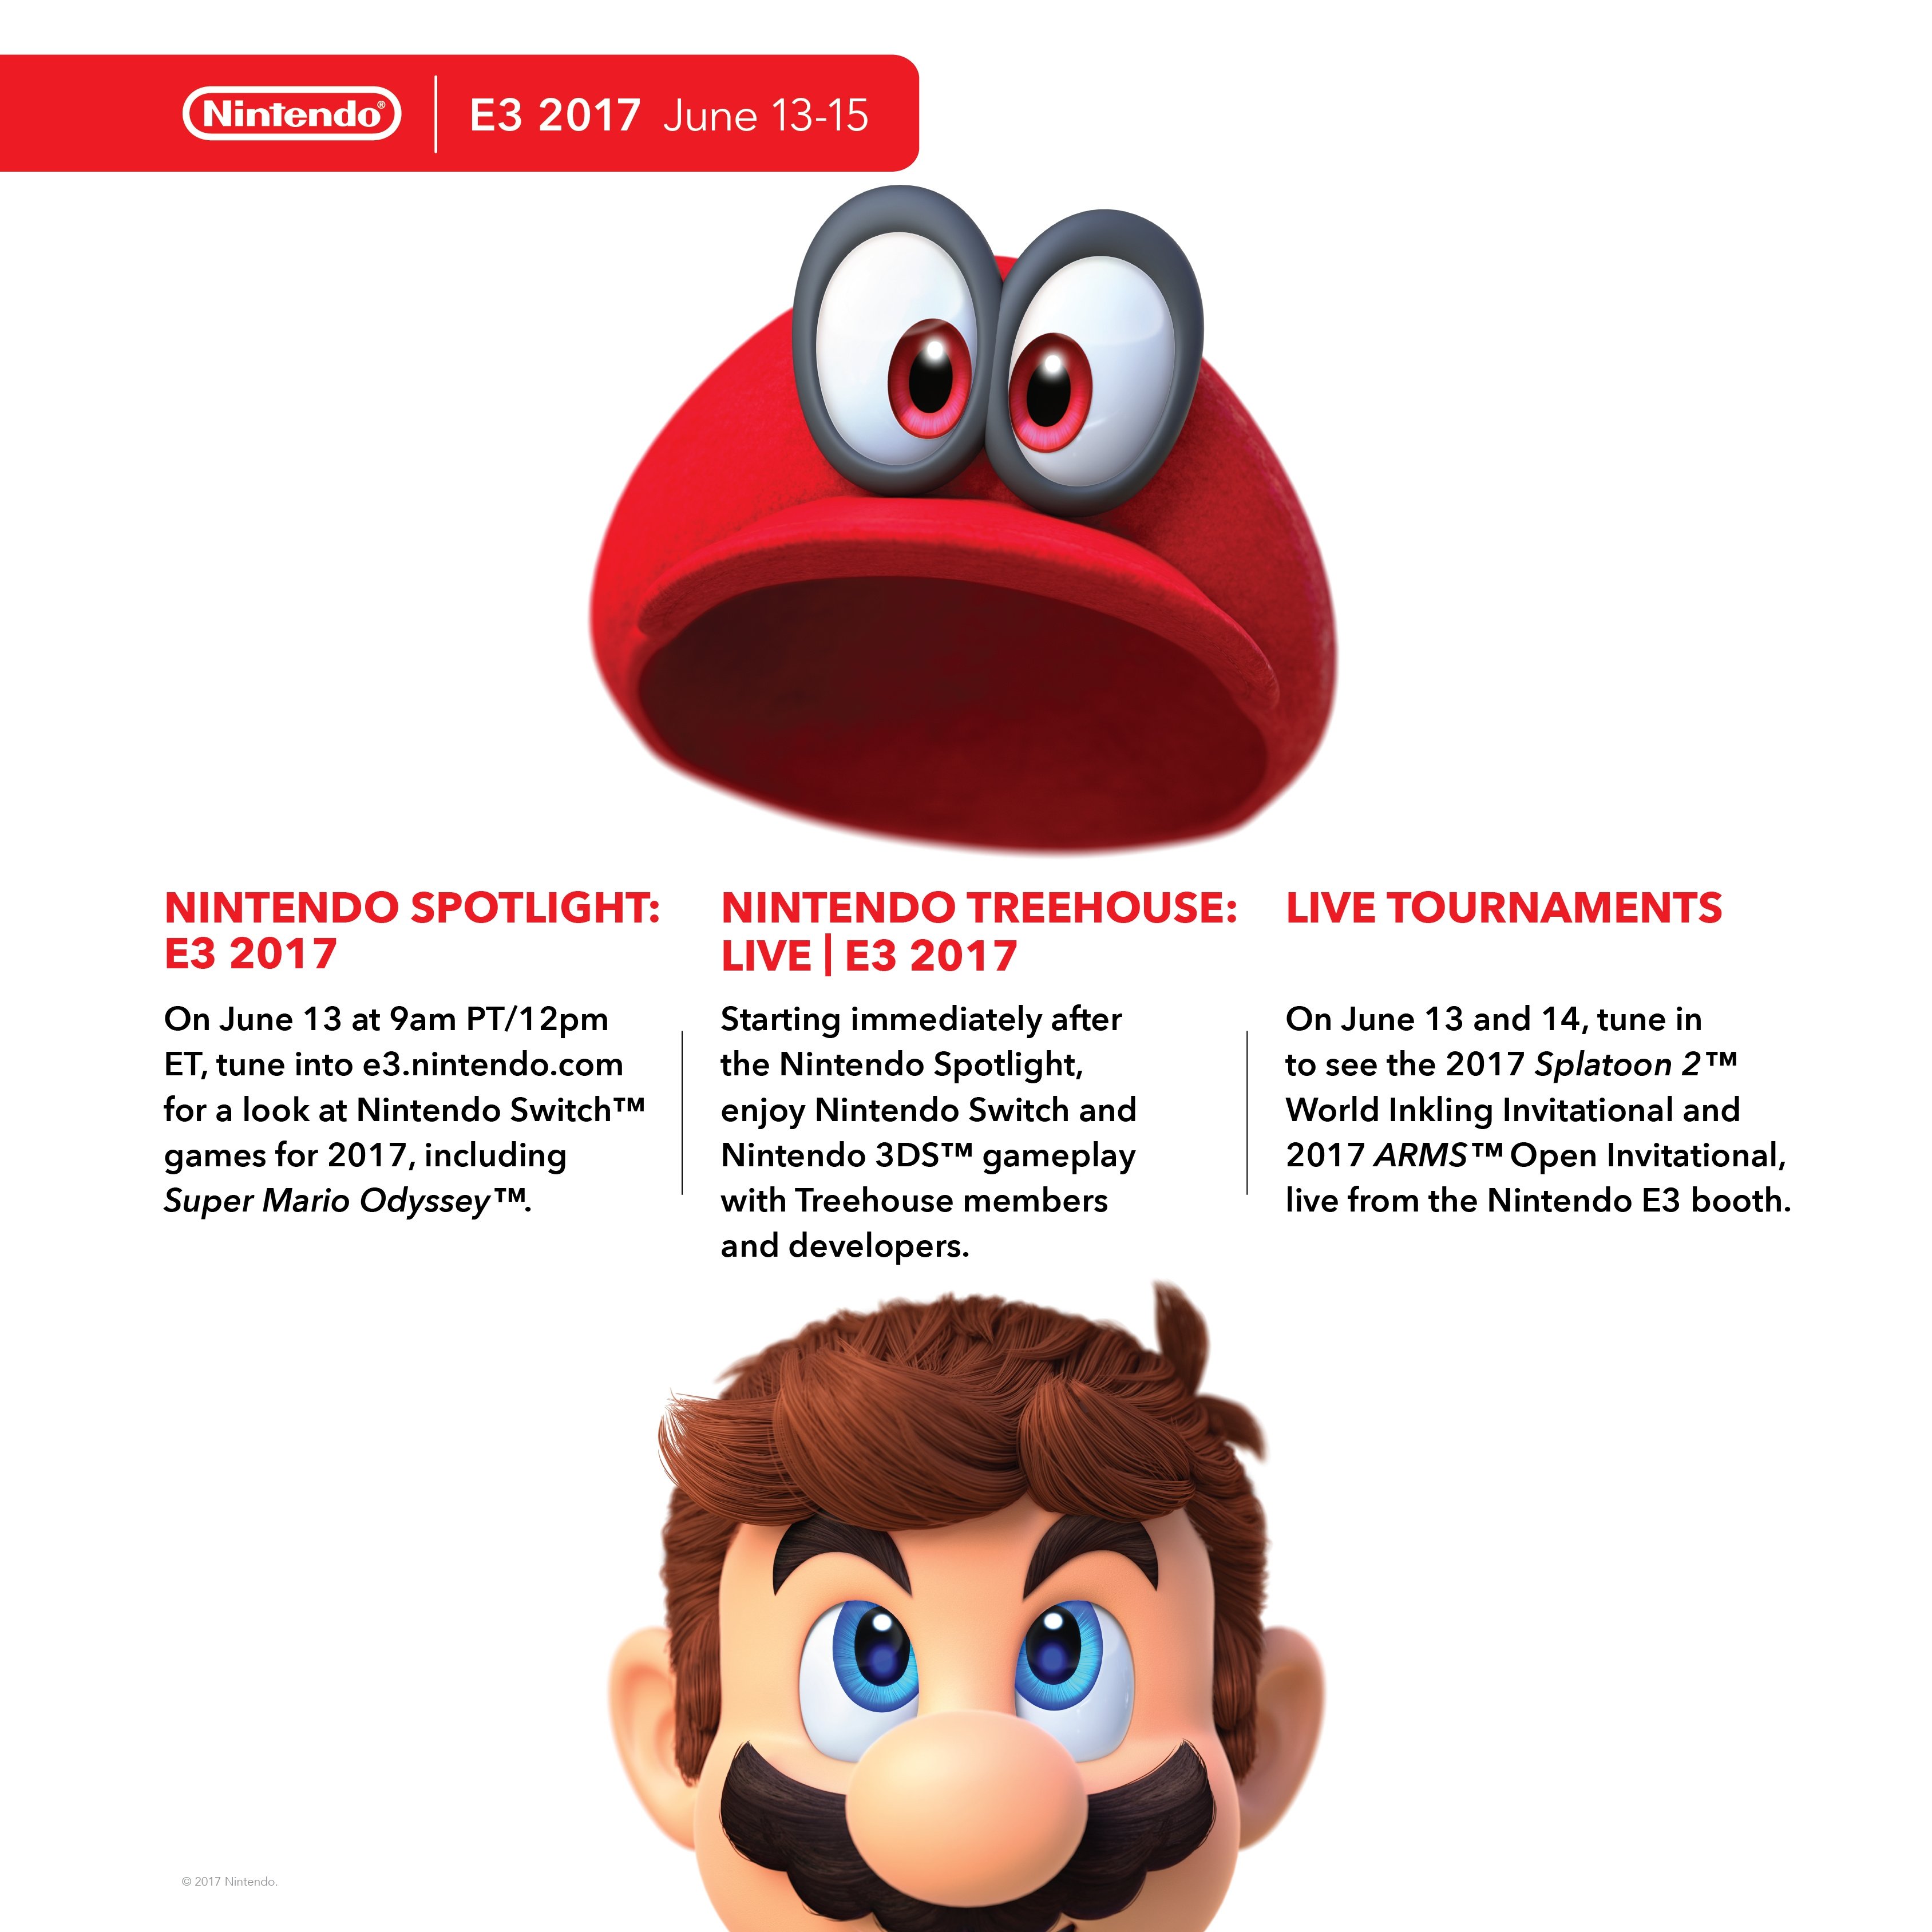 Super Mario Odyssey - Game Trailer - Nintendo E3 2017 